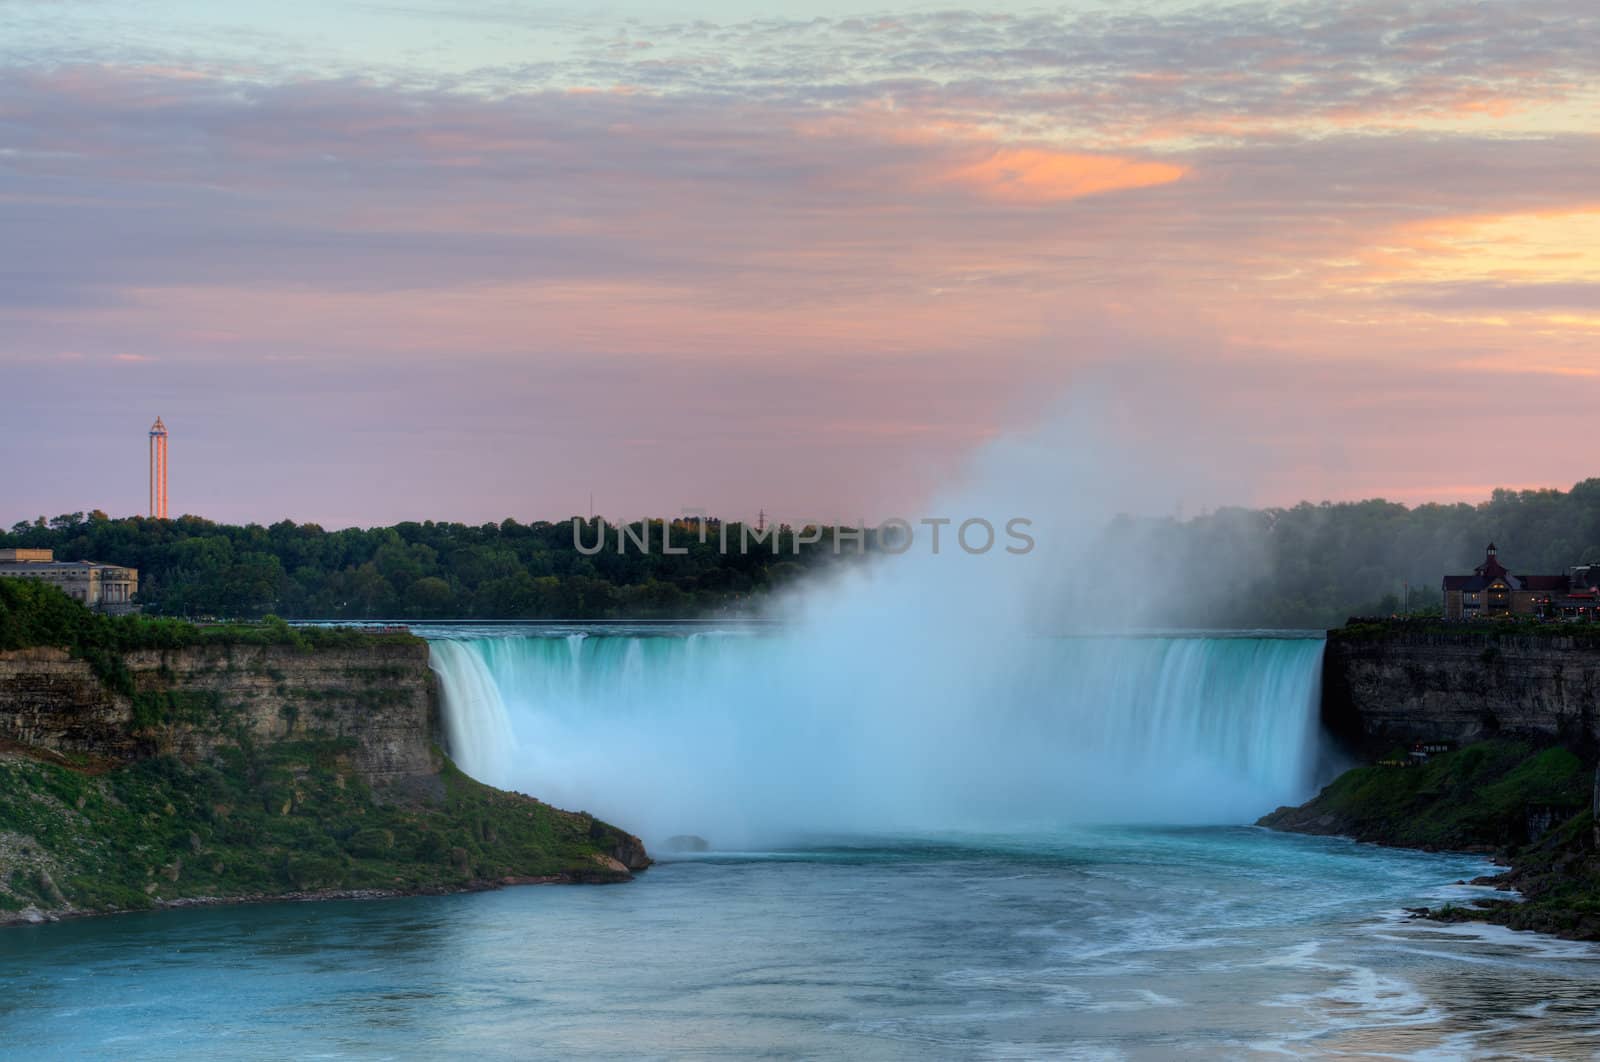 Niagara Falls - Horseshoe Falls, Ontario, Canada early fall